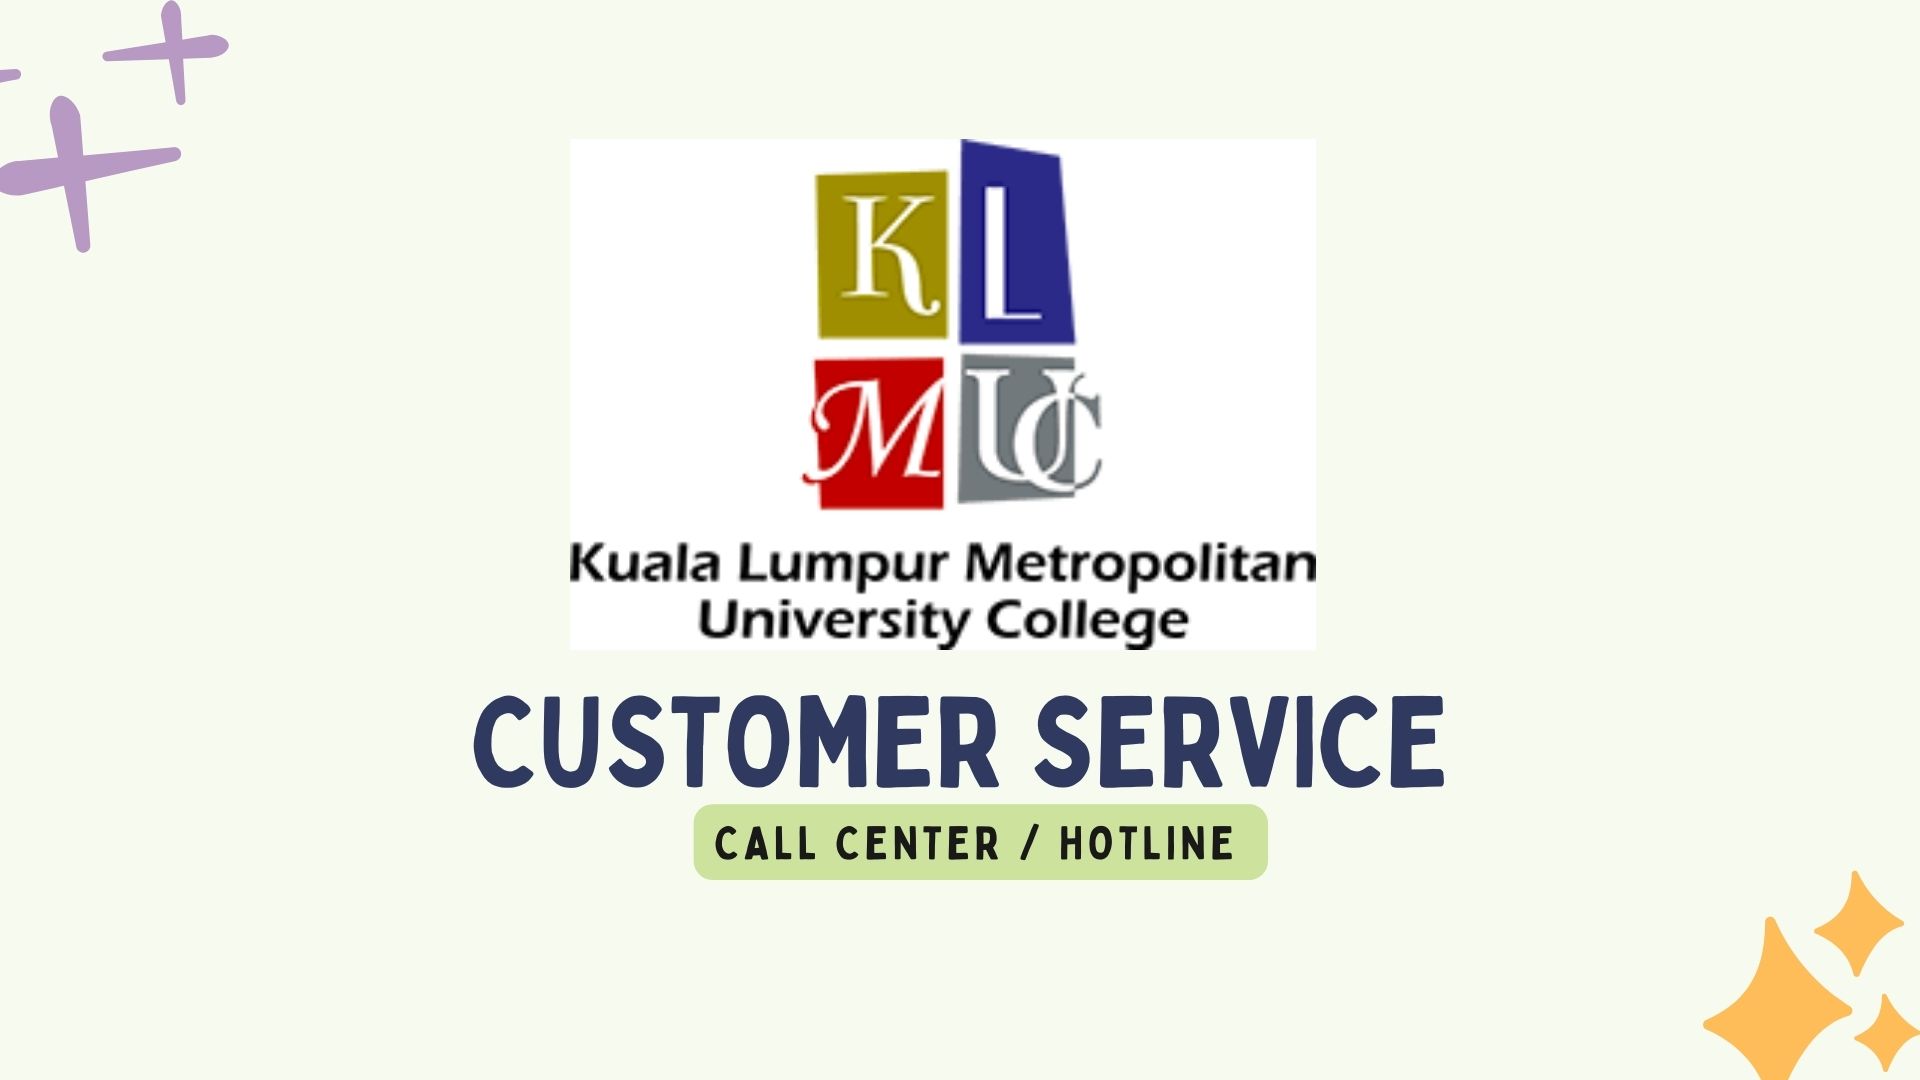 Kuala Lumpur Metropolitan University College Contact